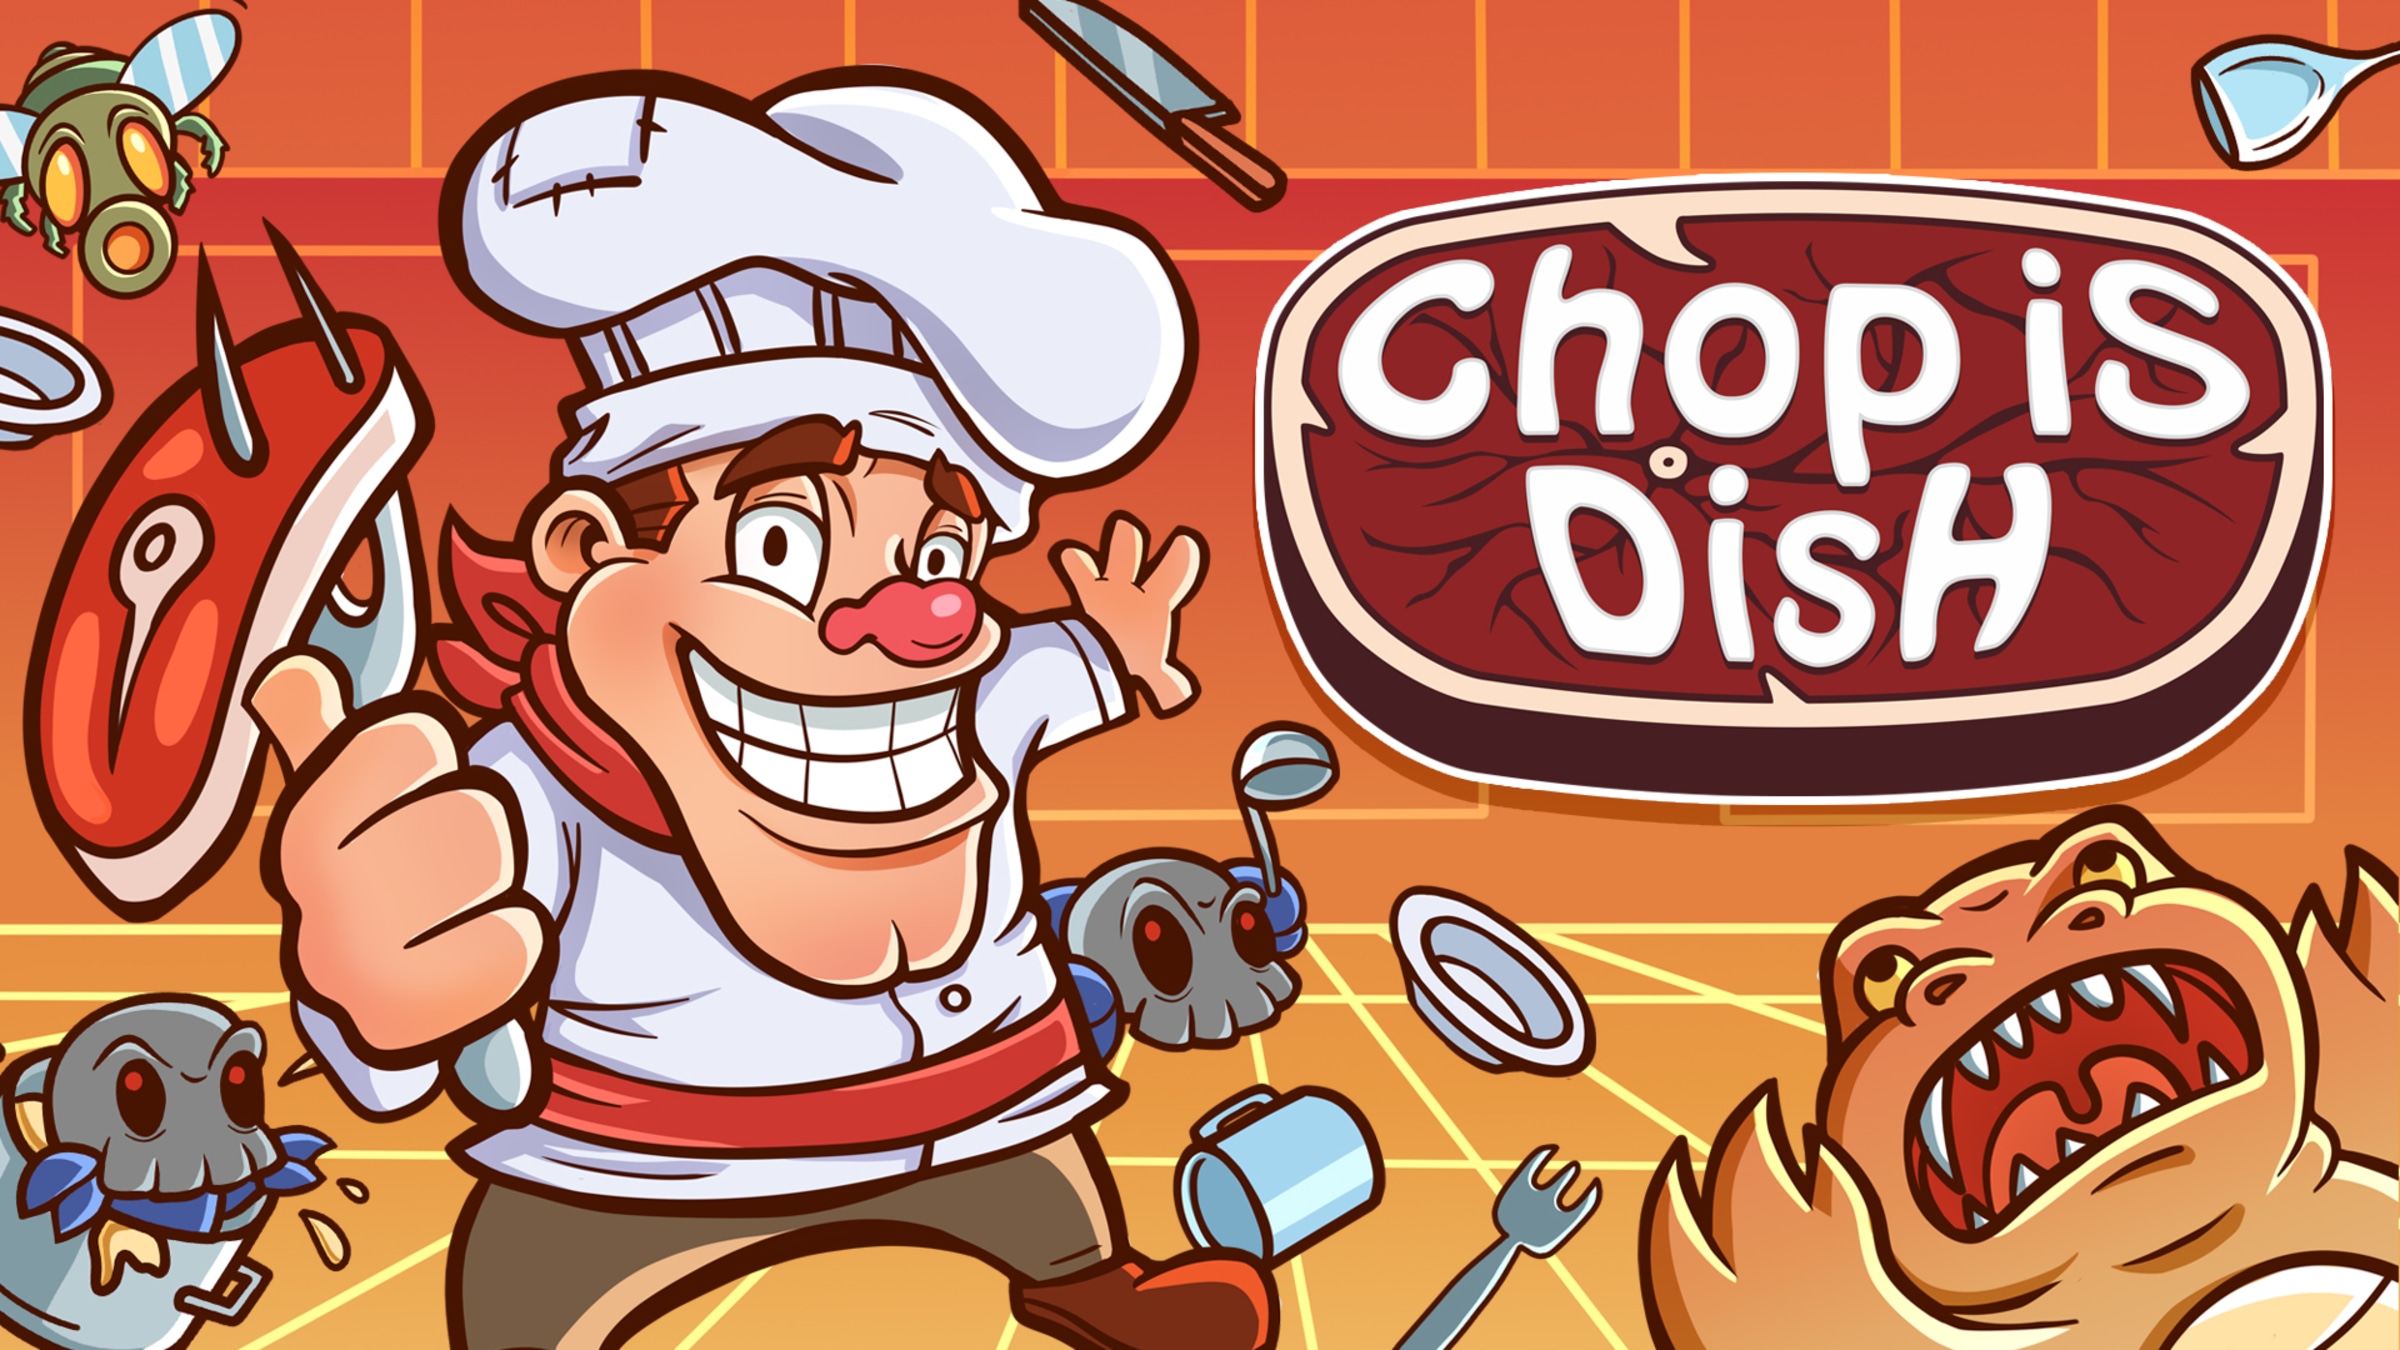 Переводите dish. Chop is dish. Chop is dish игра. Chop Chop игра. Chop is dish приколы.